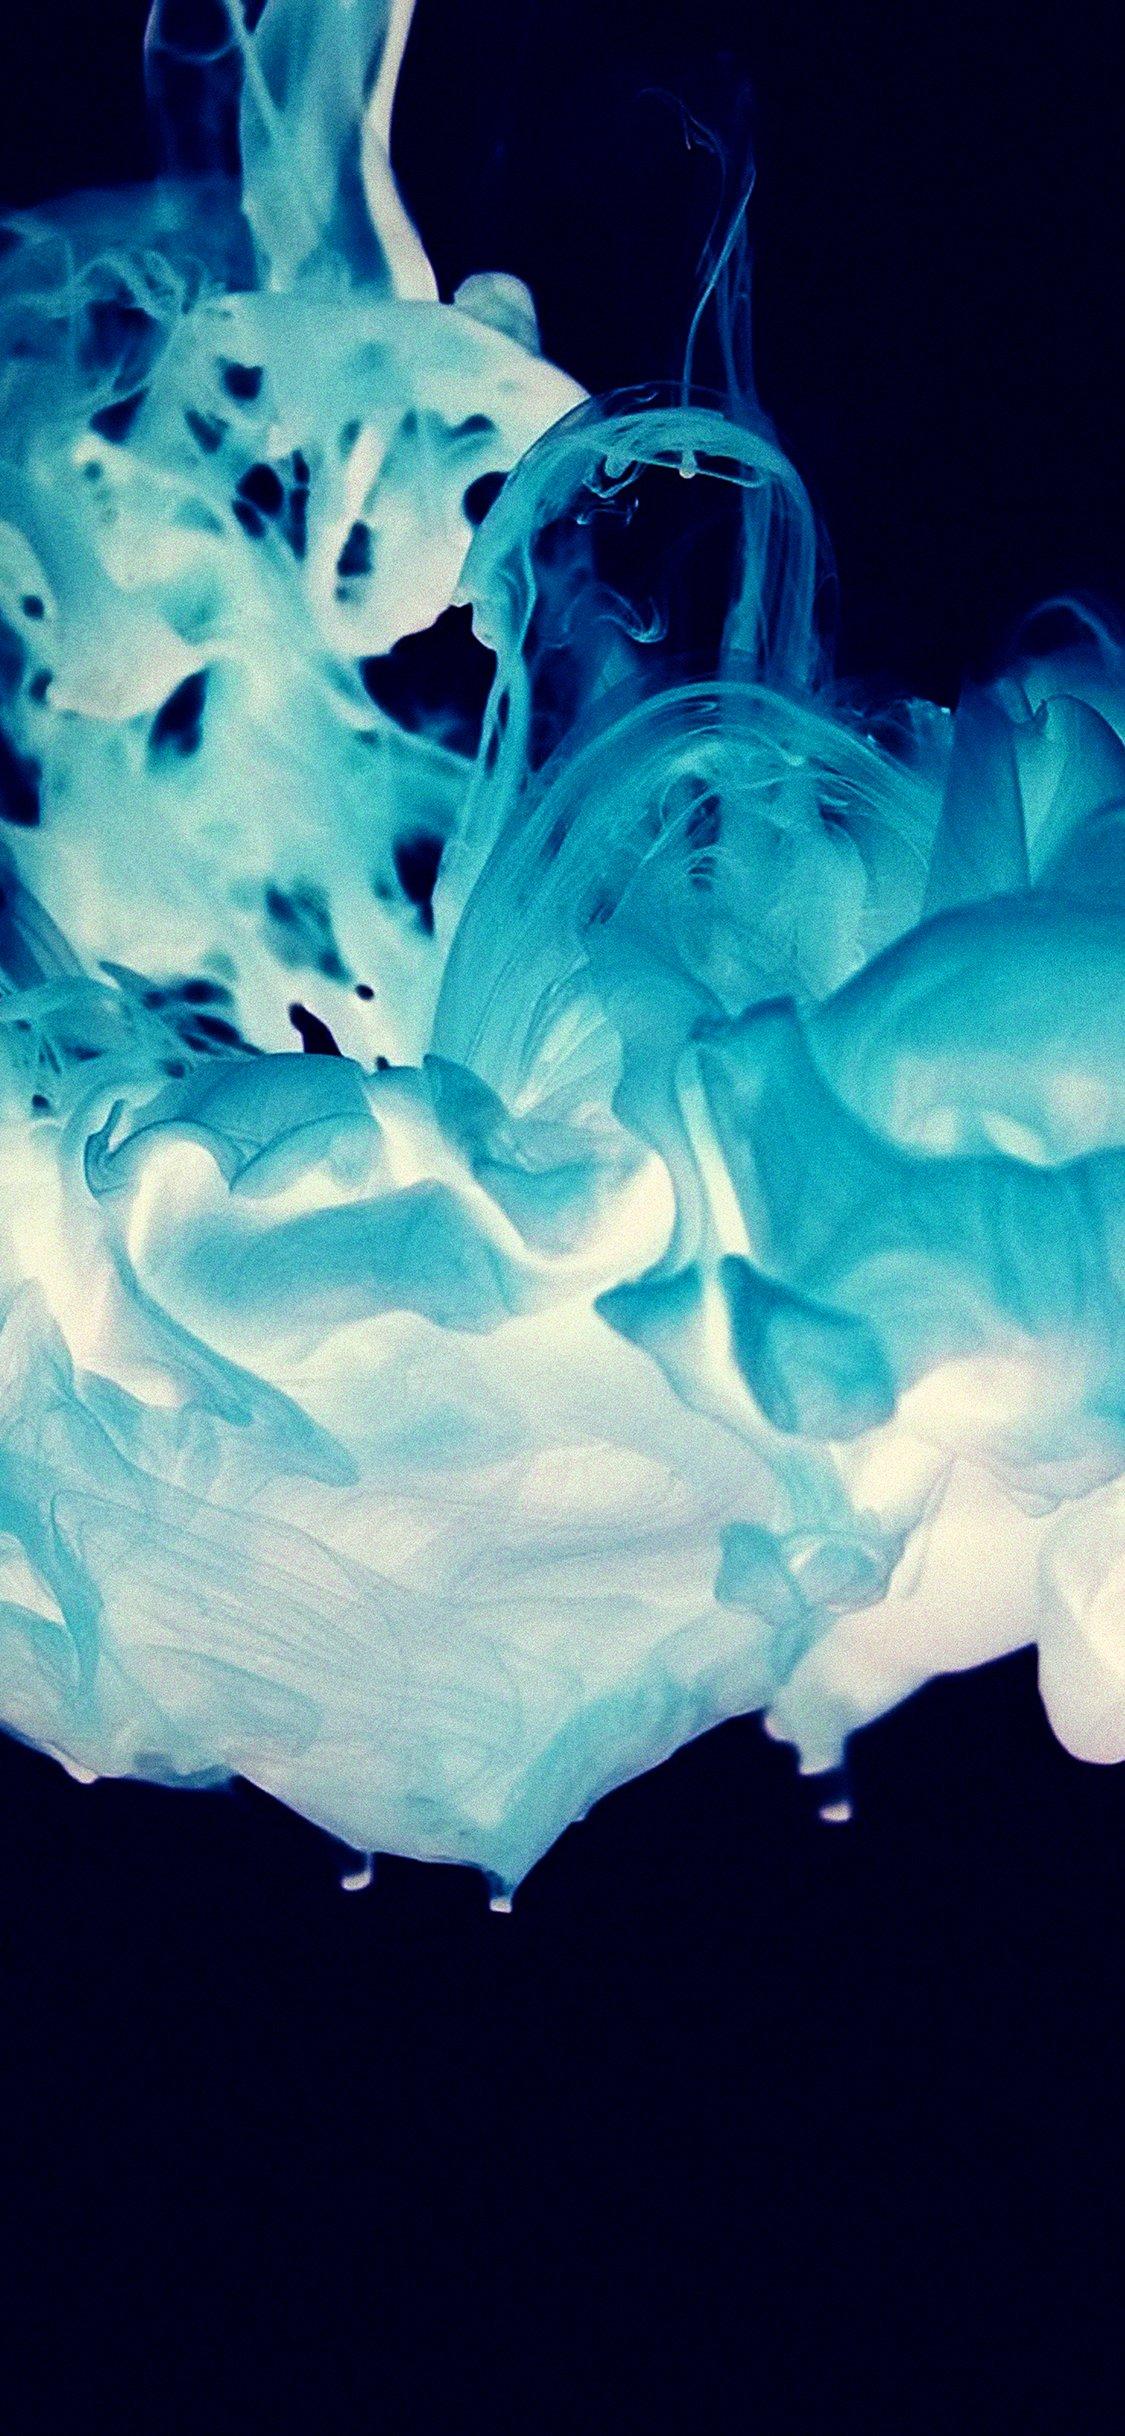 iPhone X wallpaper. blue smoke art wonderful